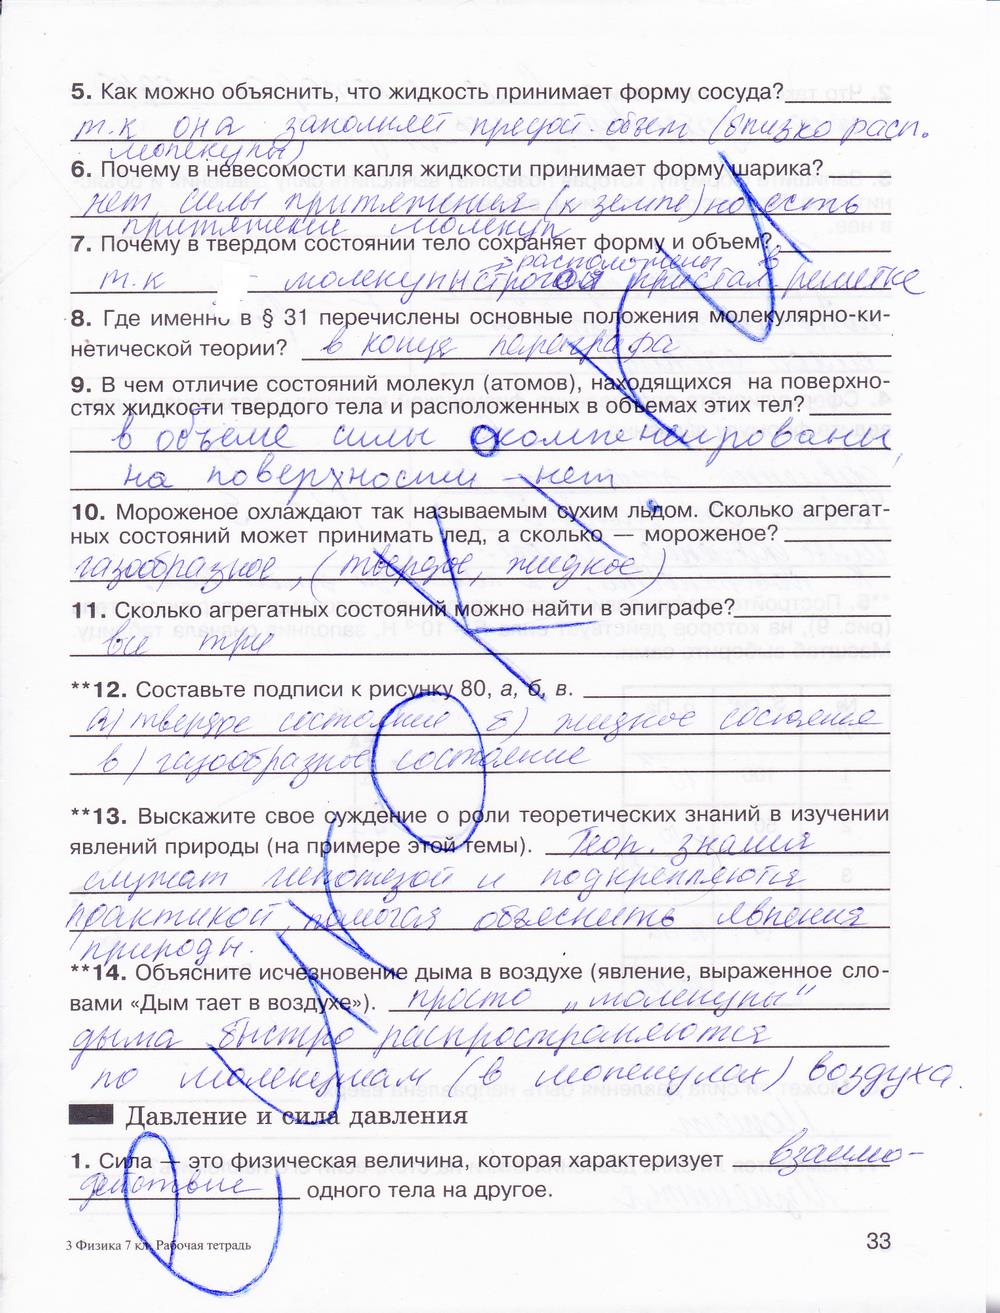 гдз 7 класс рабочая тетрадь страница 33 физика Мартынова, Бовин, Коротаев